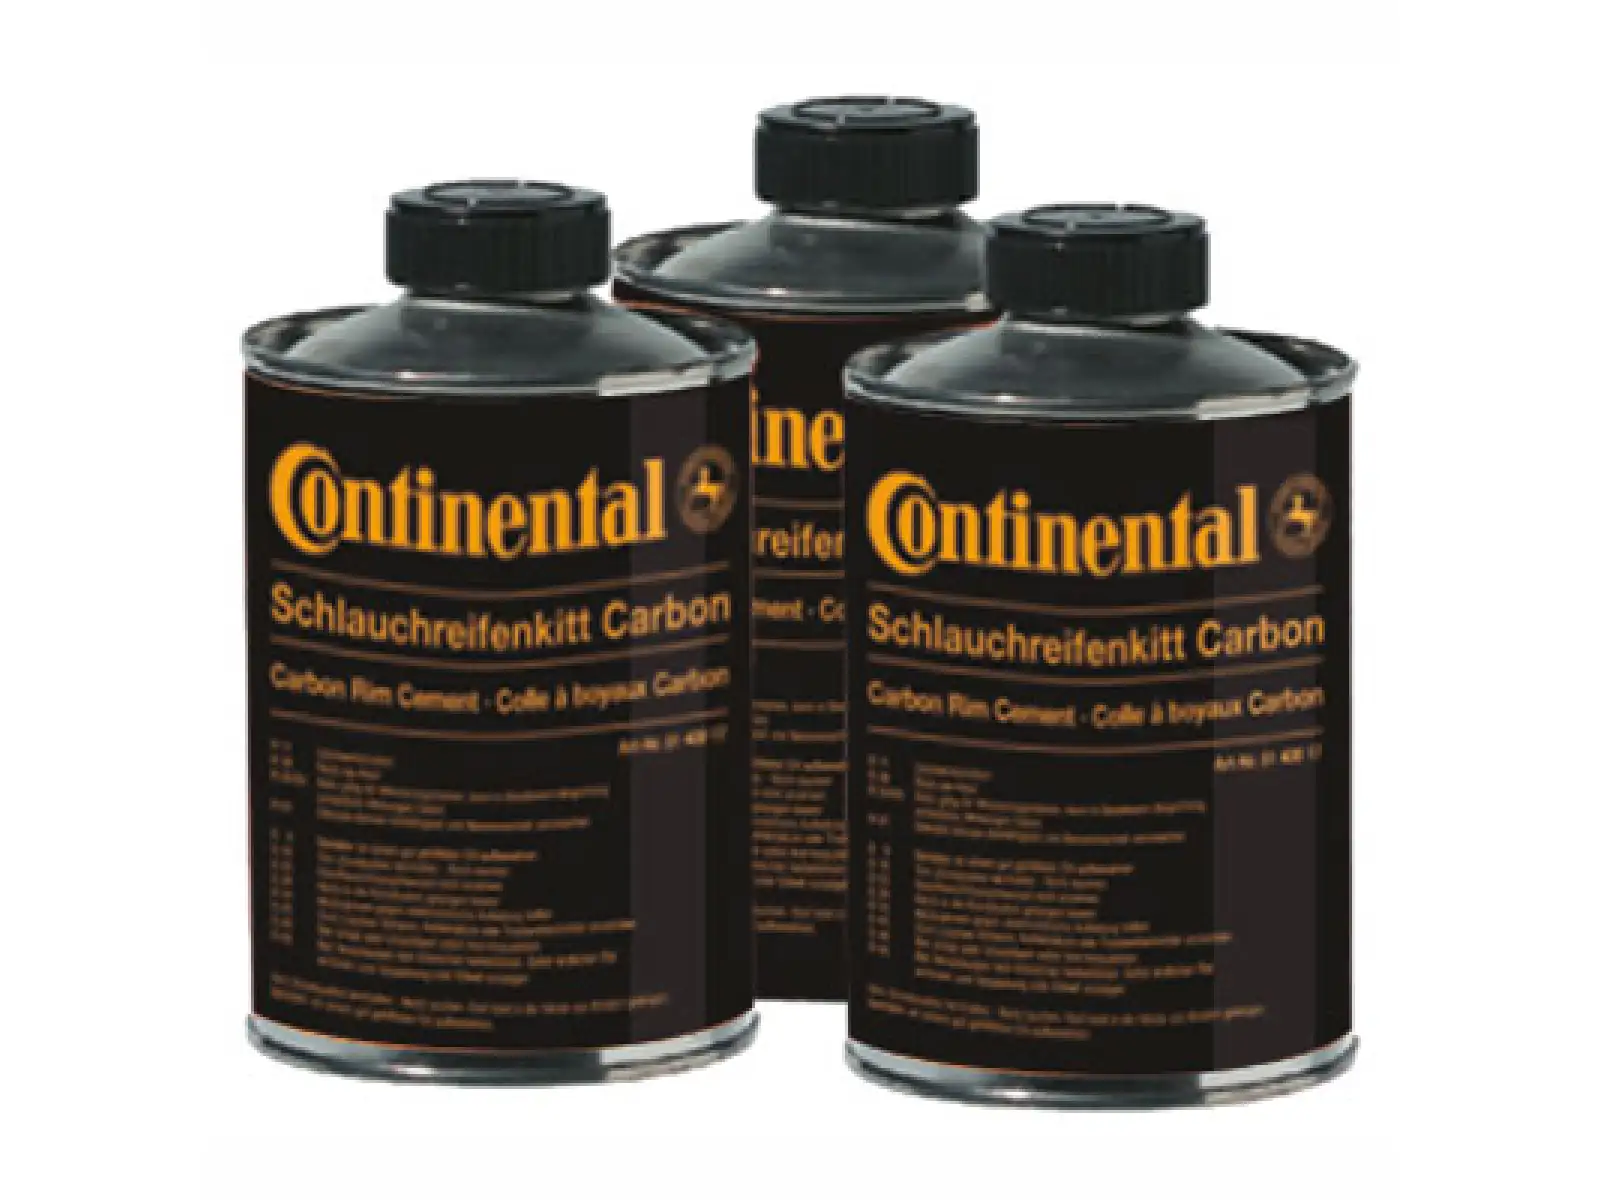 Continental Galuska Glue Carbon 200 g